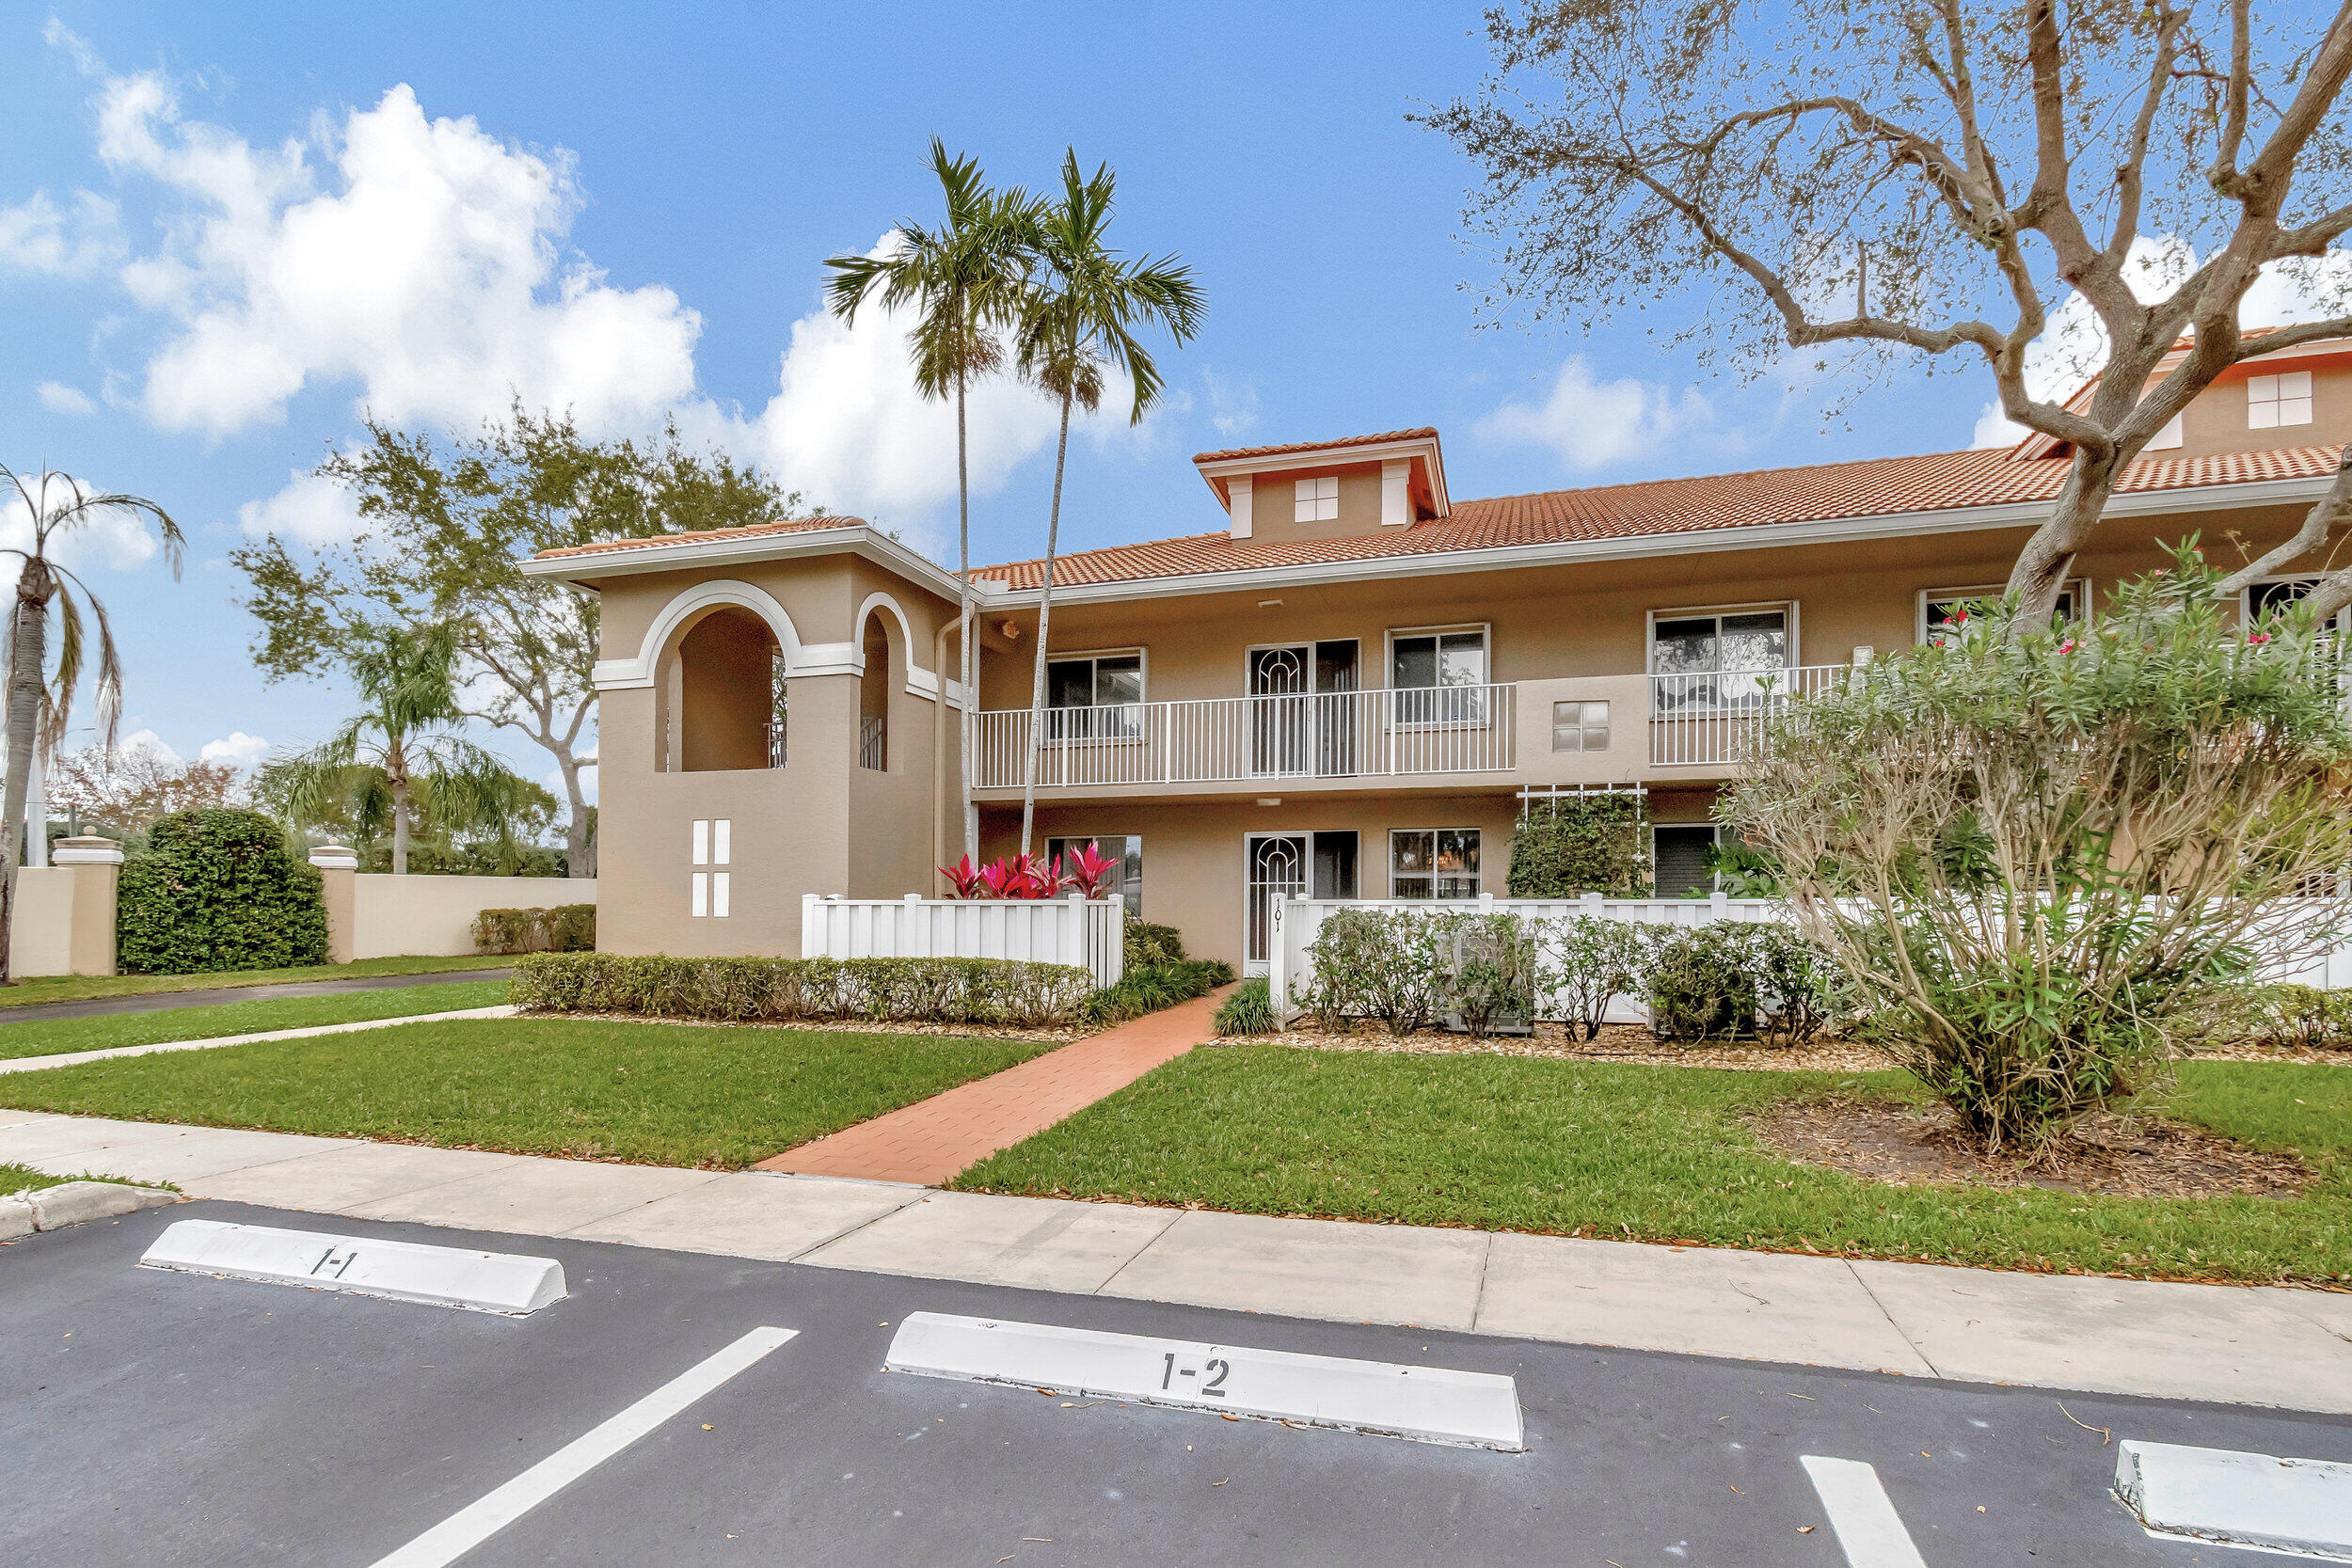 Property for Sale at 5876 Regal Glen Drive 101, Boynton Beach, Palm Beach County, Florida - Bedrooms: 3 
Bathrooms: 2  - $351,900